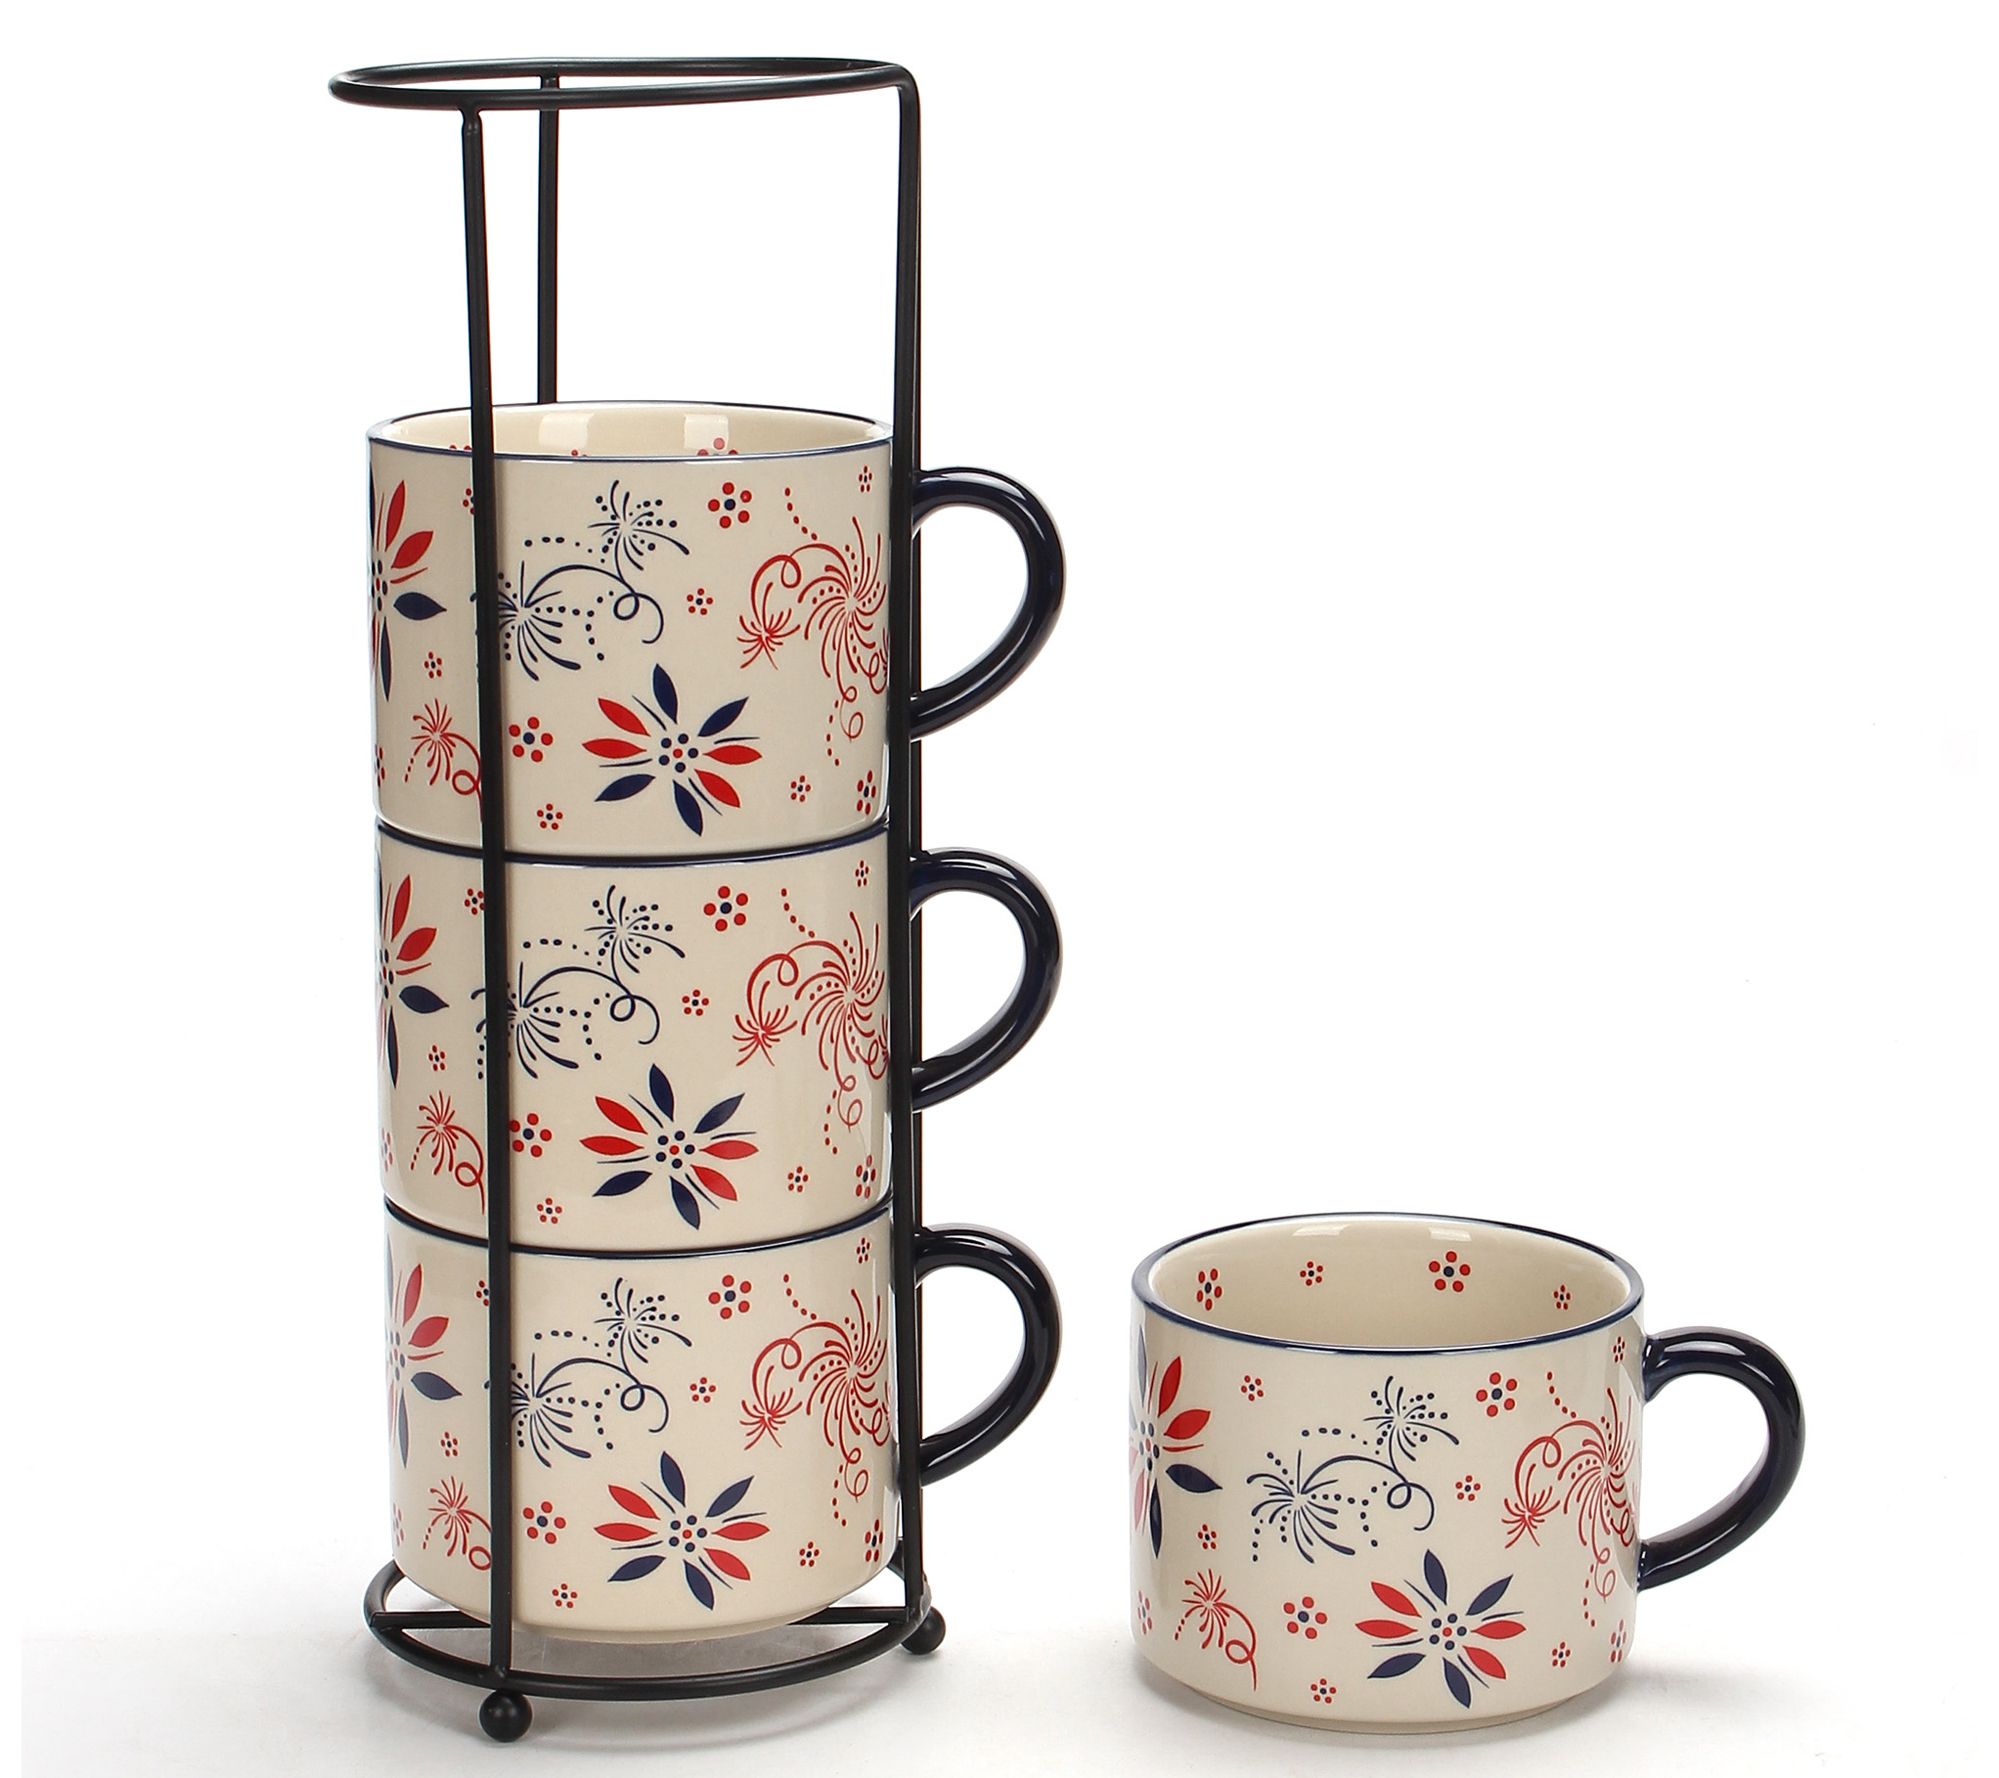 Sleek Stackable Mugs : unique coffee mug